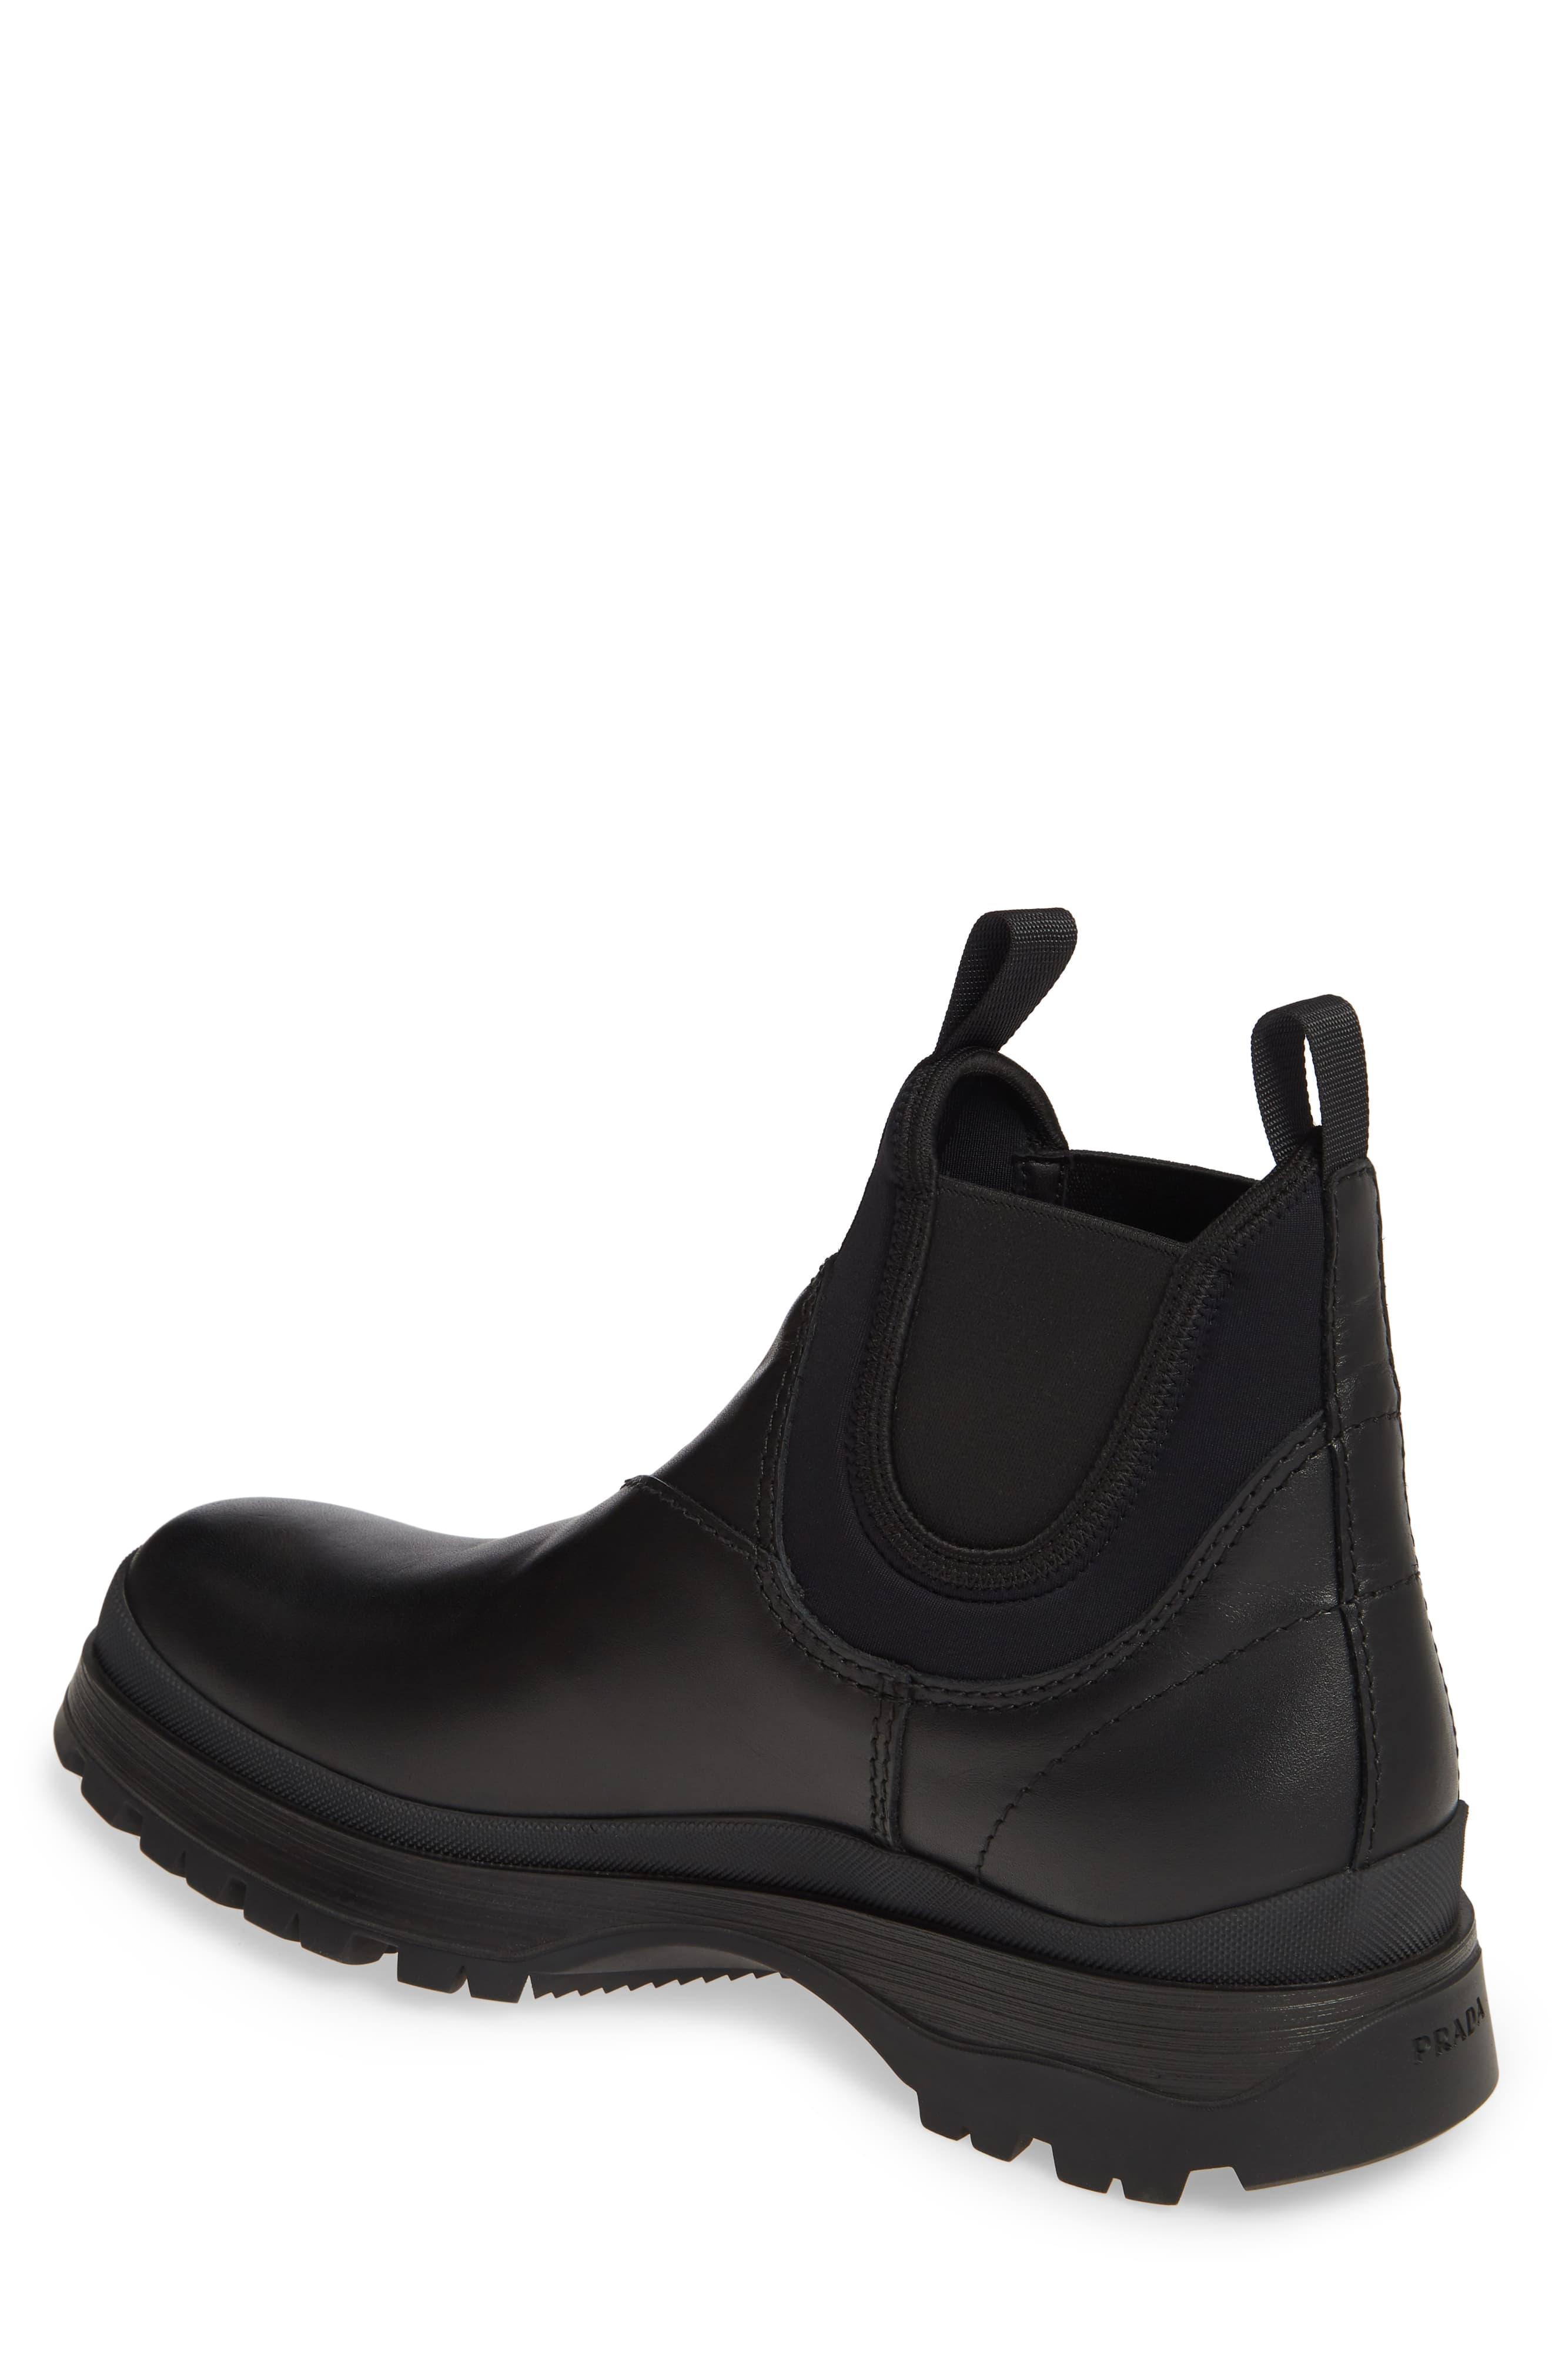 Prada Leather Novo Chelsea Boot in Nero (Black) for Men - Lyst